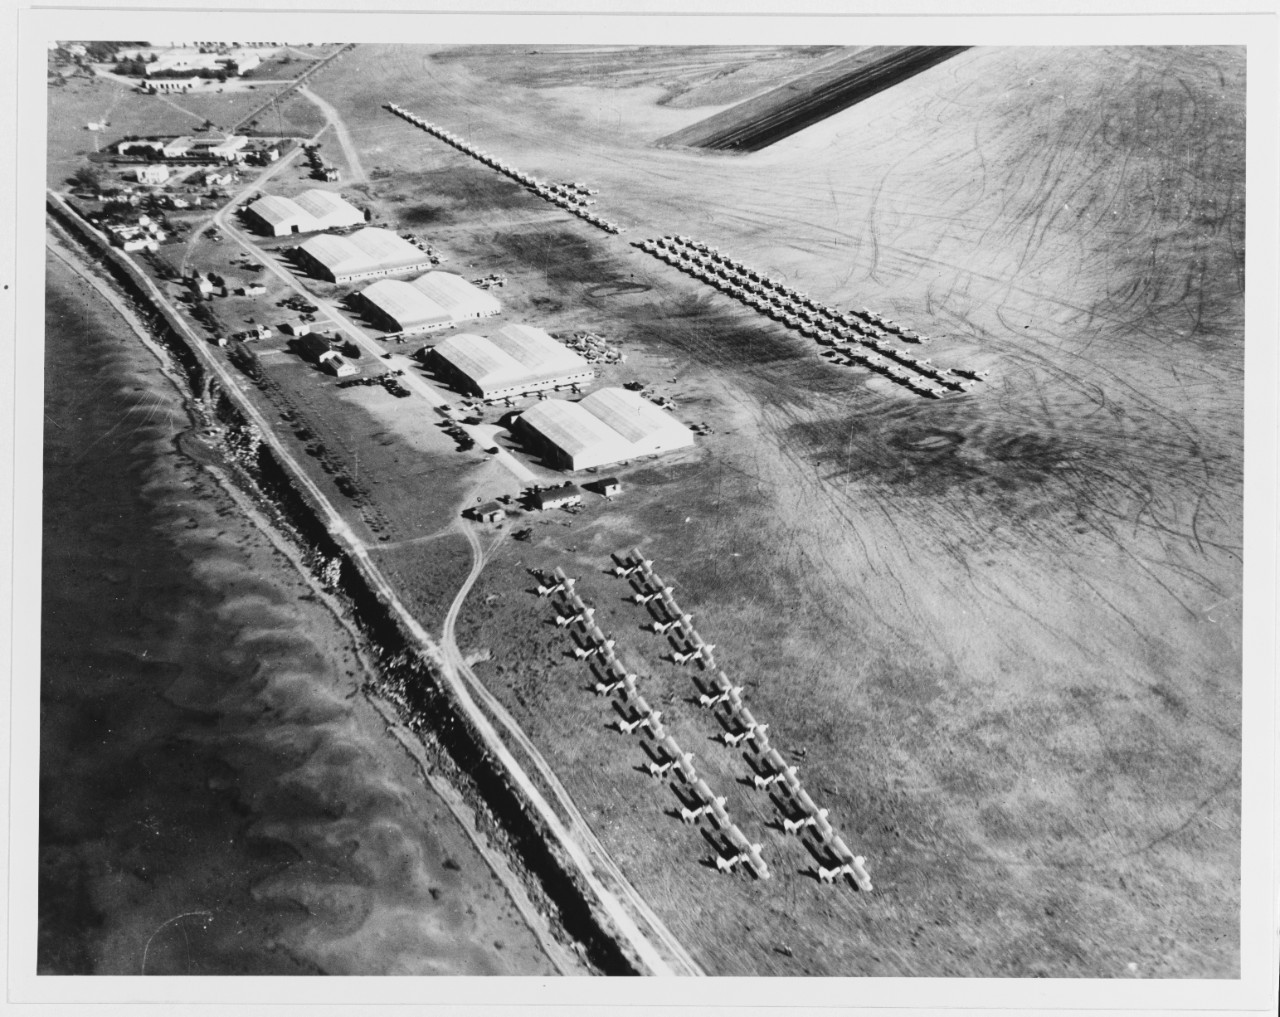 Naval Air Station North Island, San Diego, California